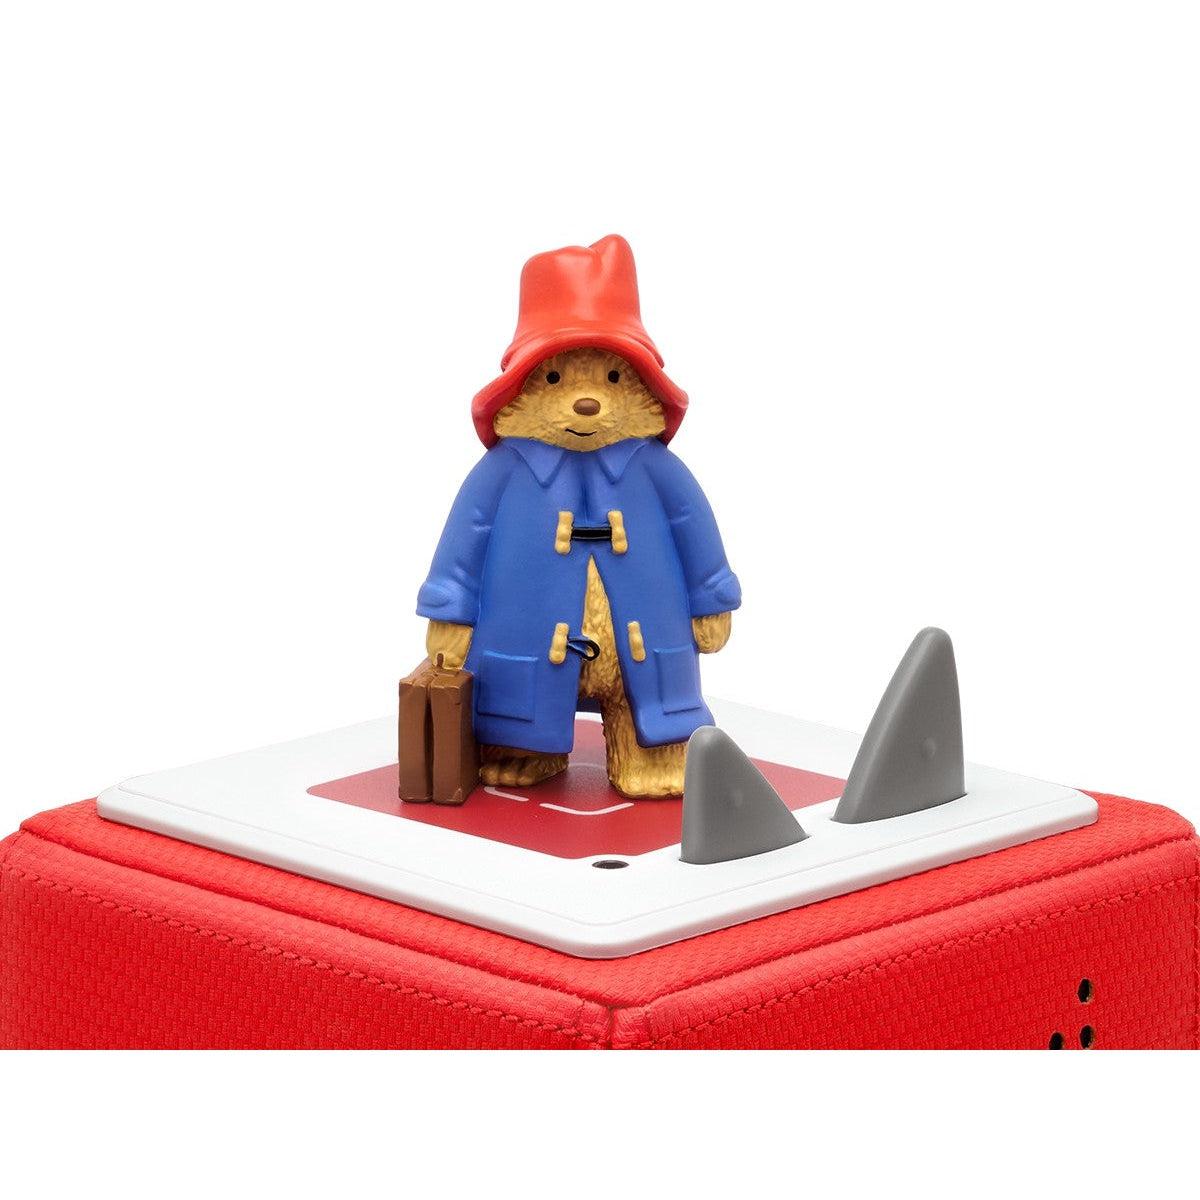 Tonies Paddington Bear - A Bear Called Paddington - Audio Character for use with Toniebox Player